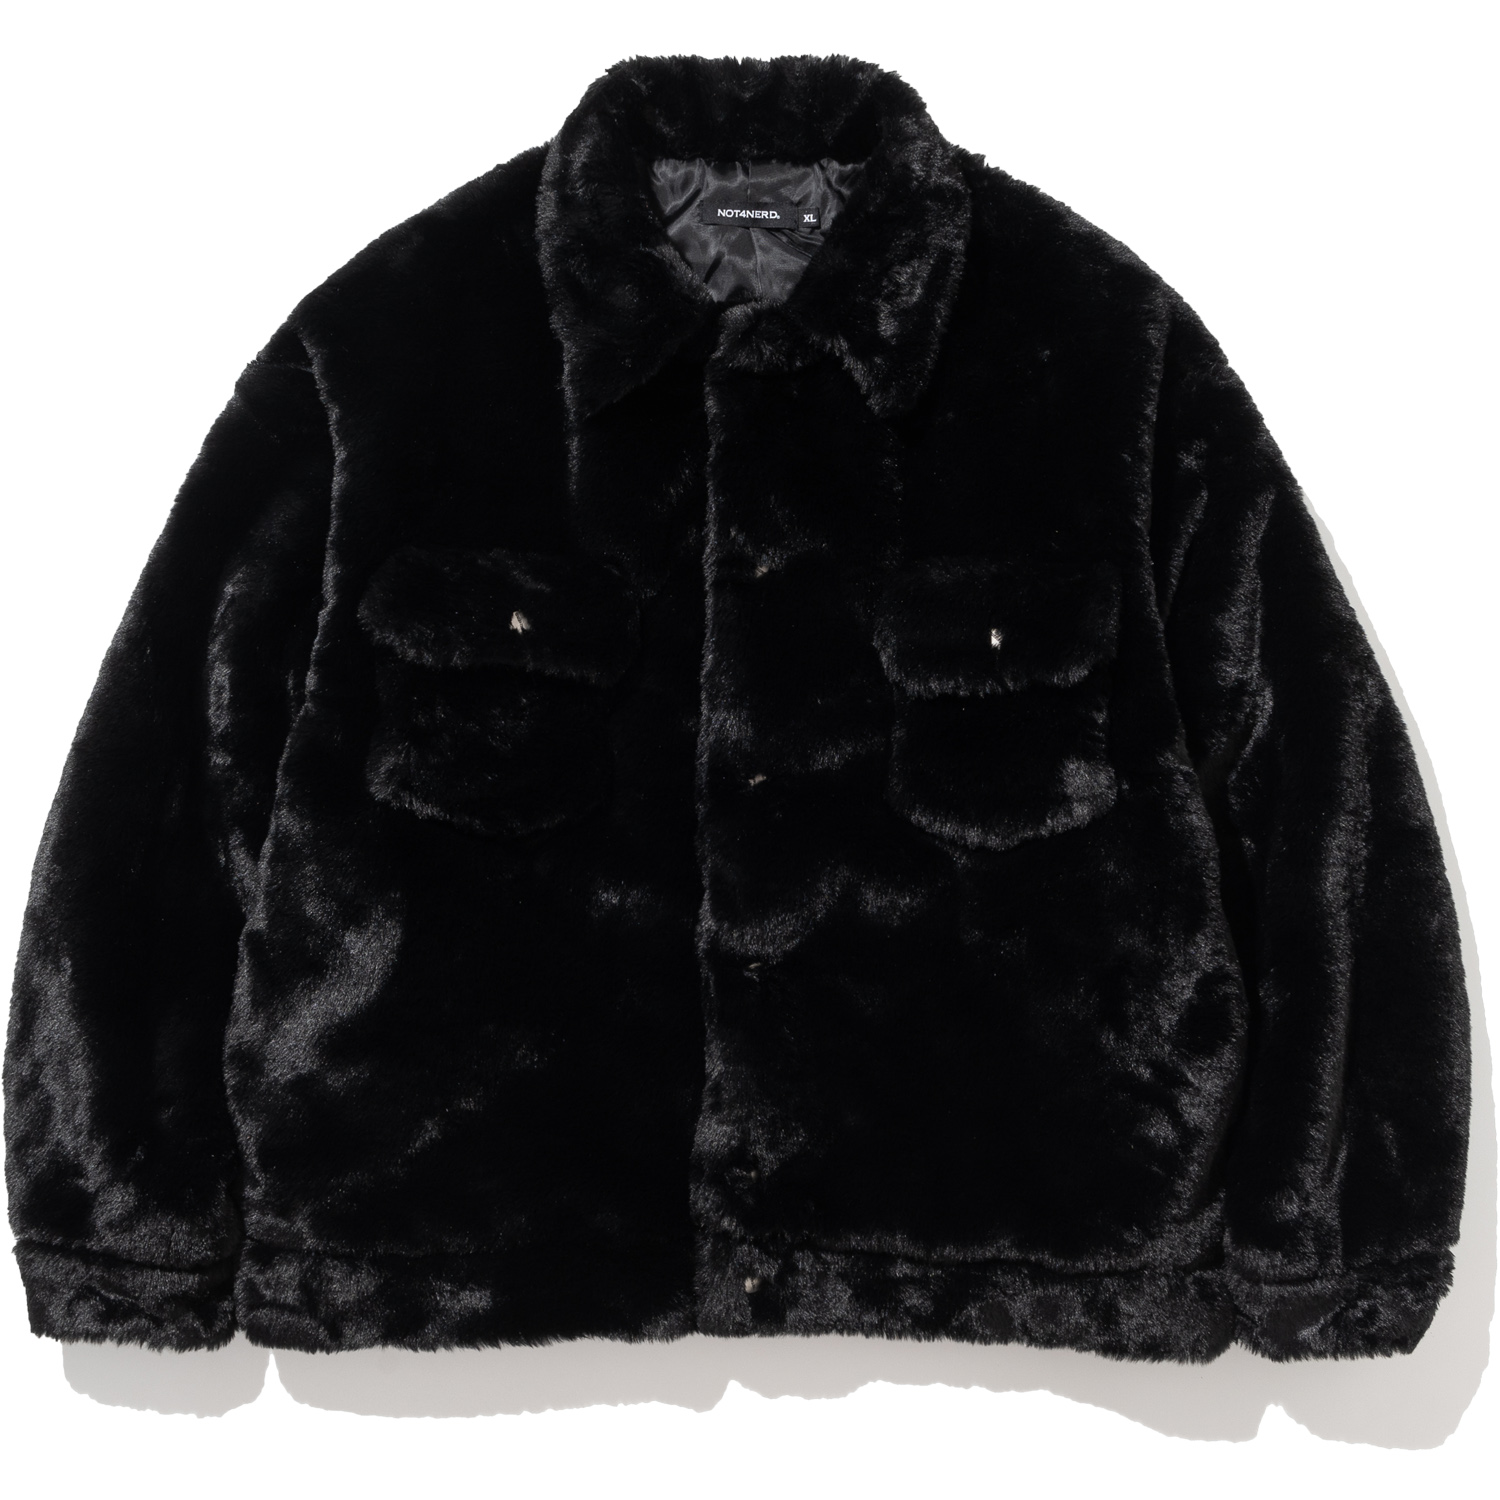 Fur Trucker Jacket - Black,NOT4NERD